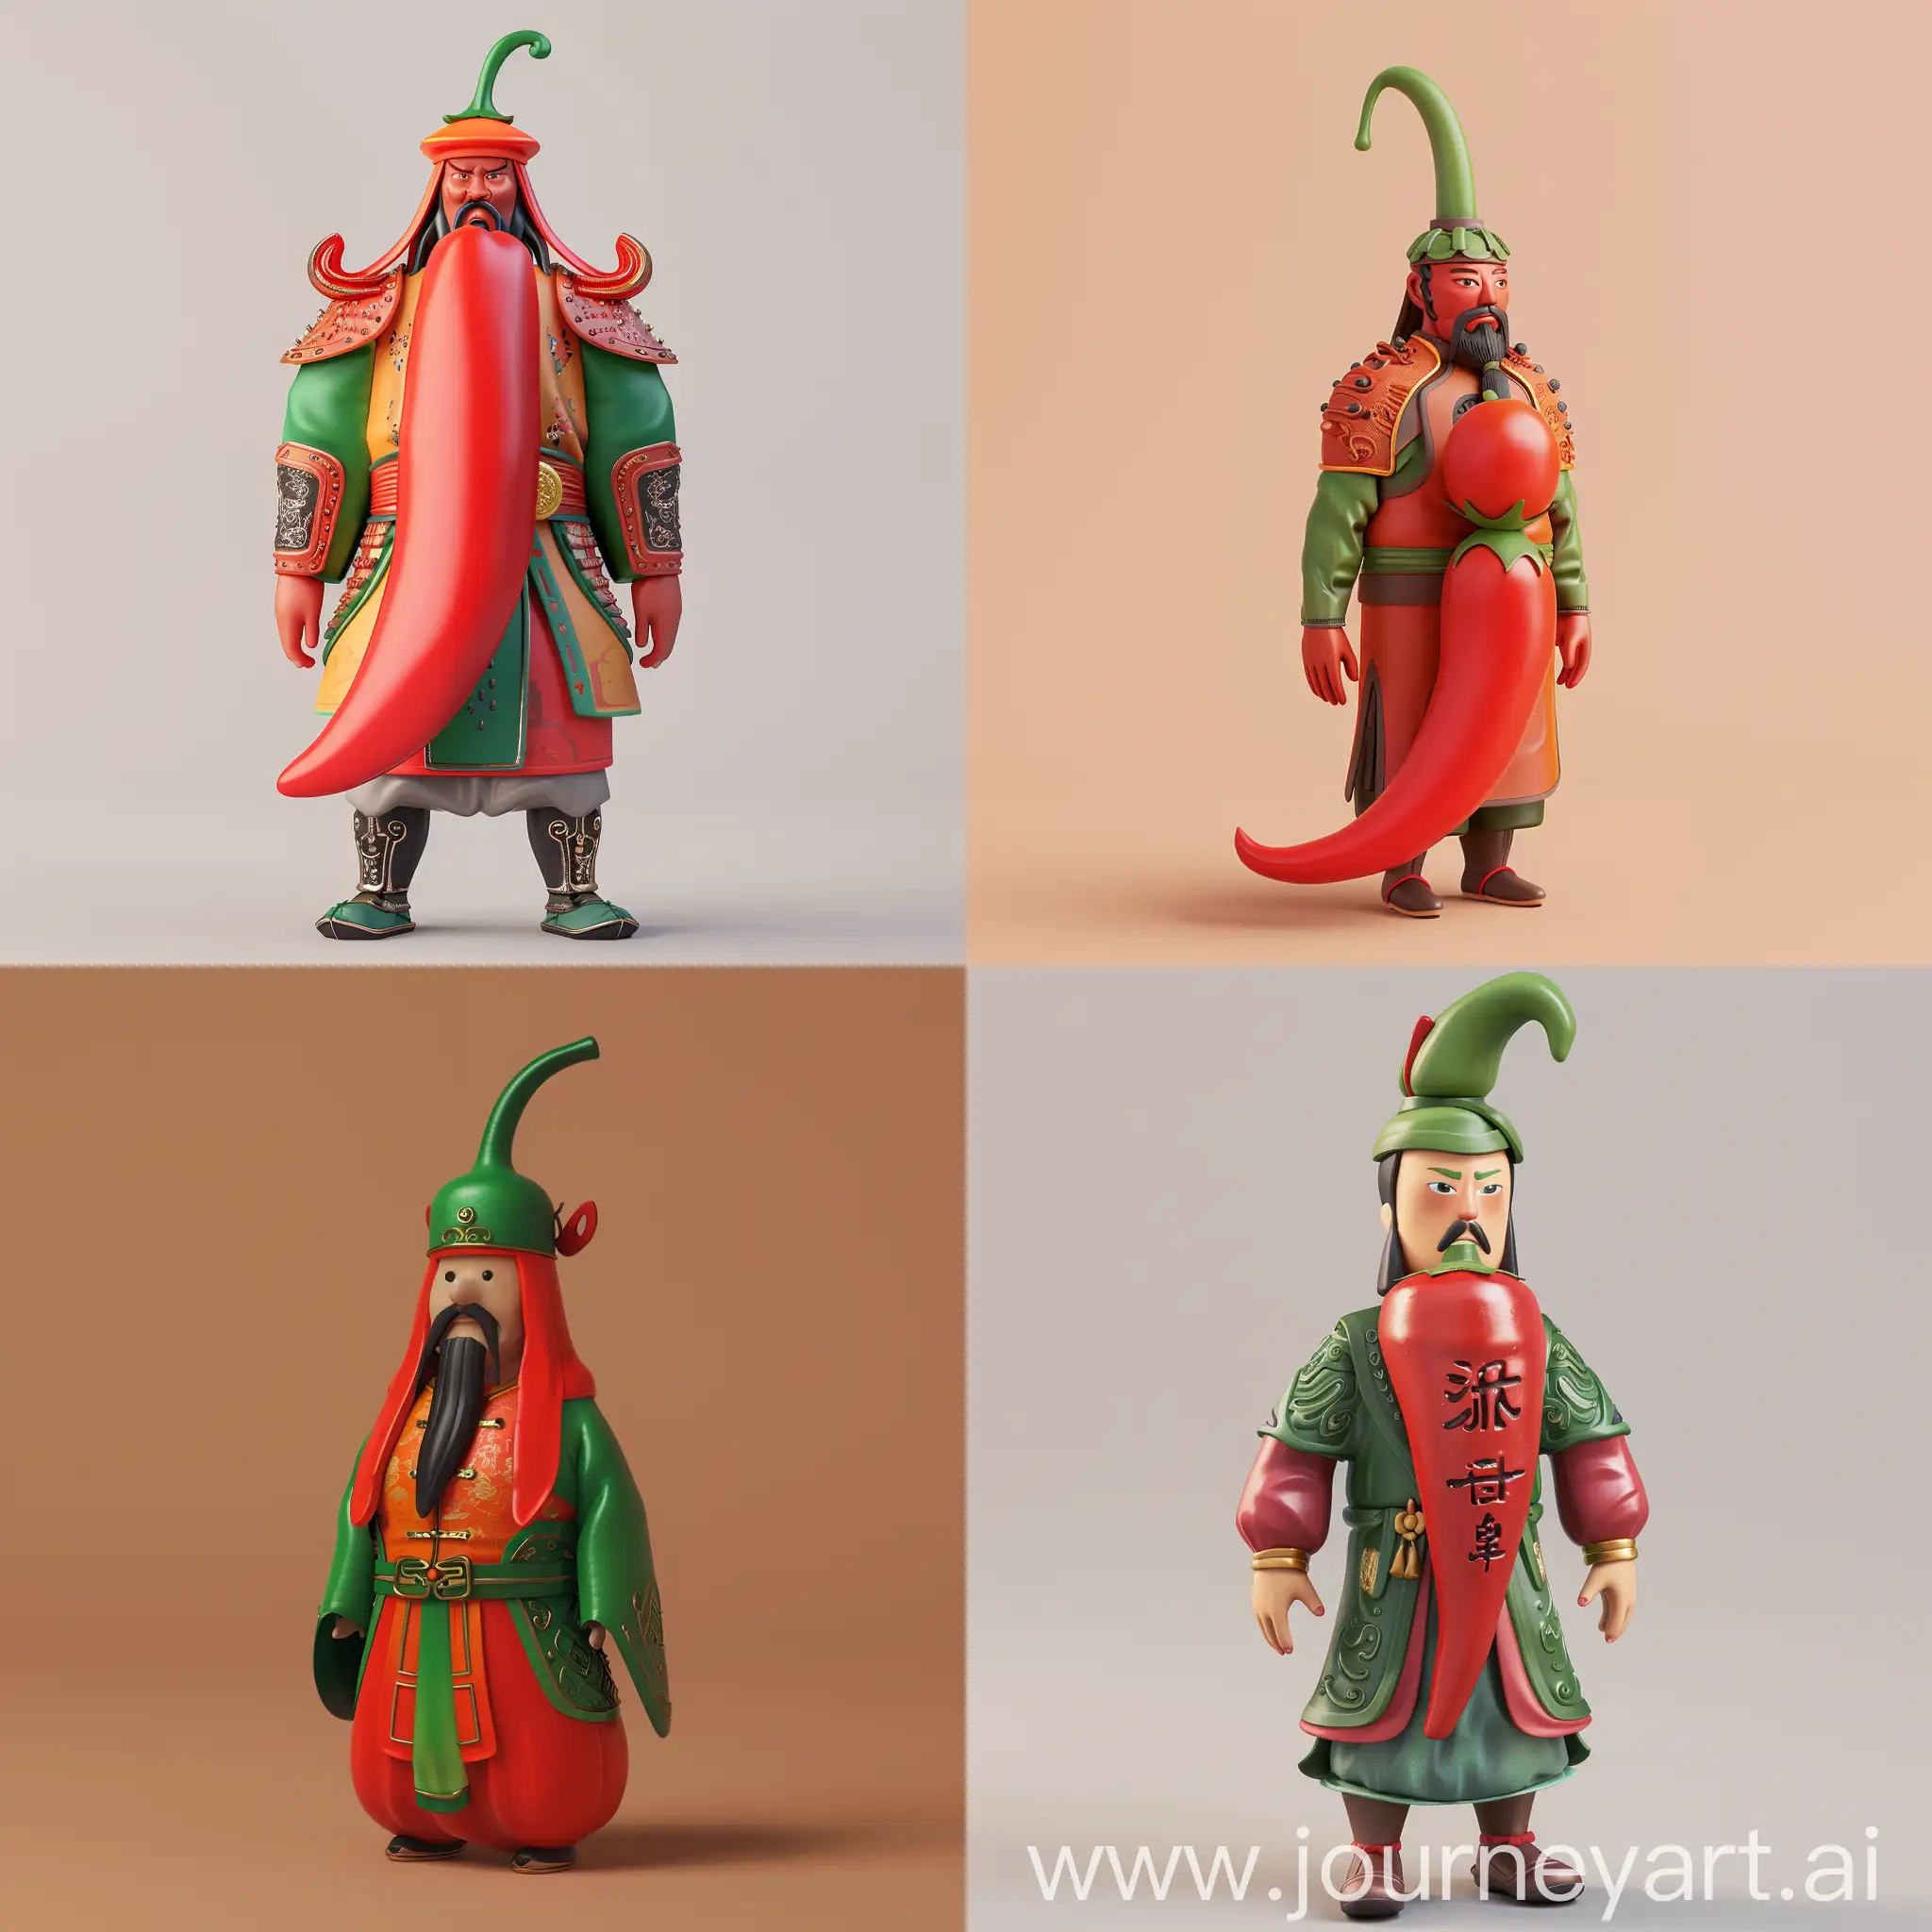 Eastern-Han-Dynasty-General-Chili-Pepper-Figurine-Toy